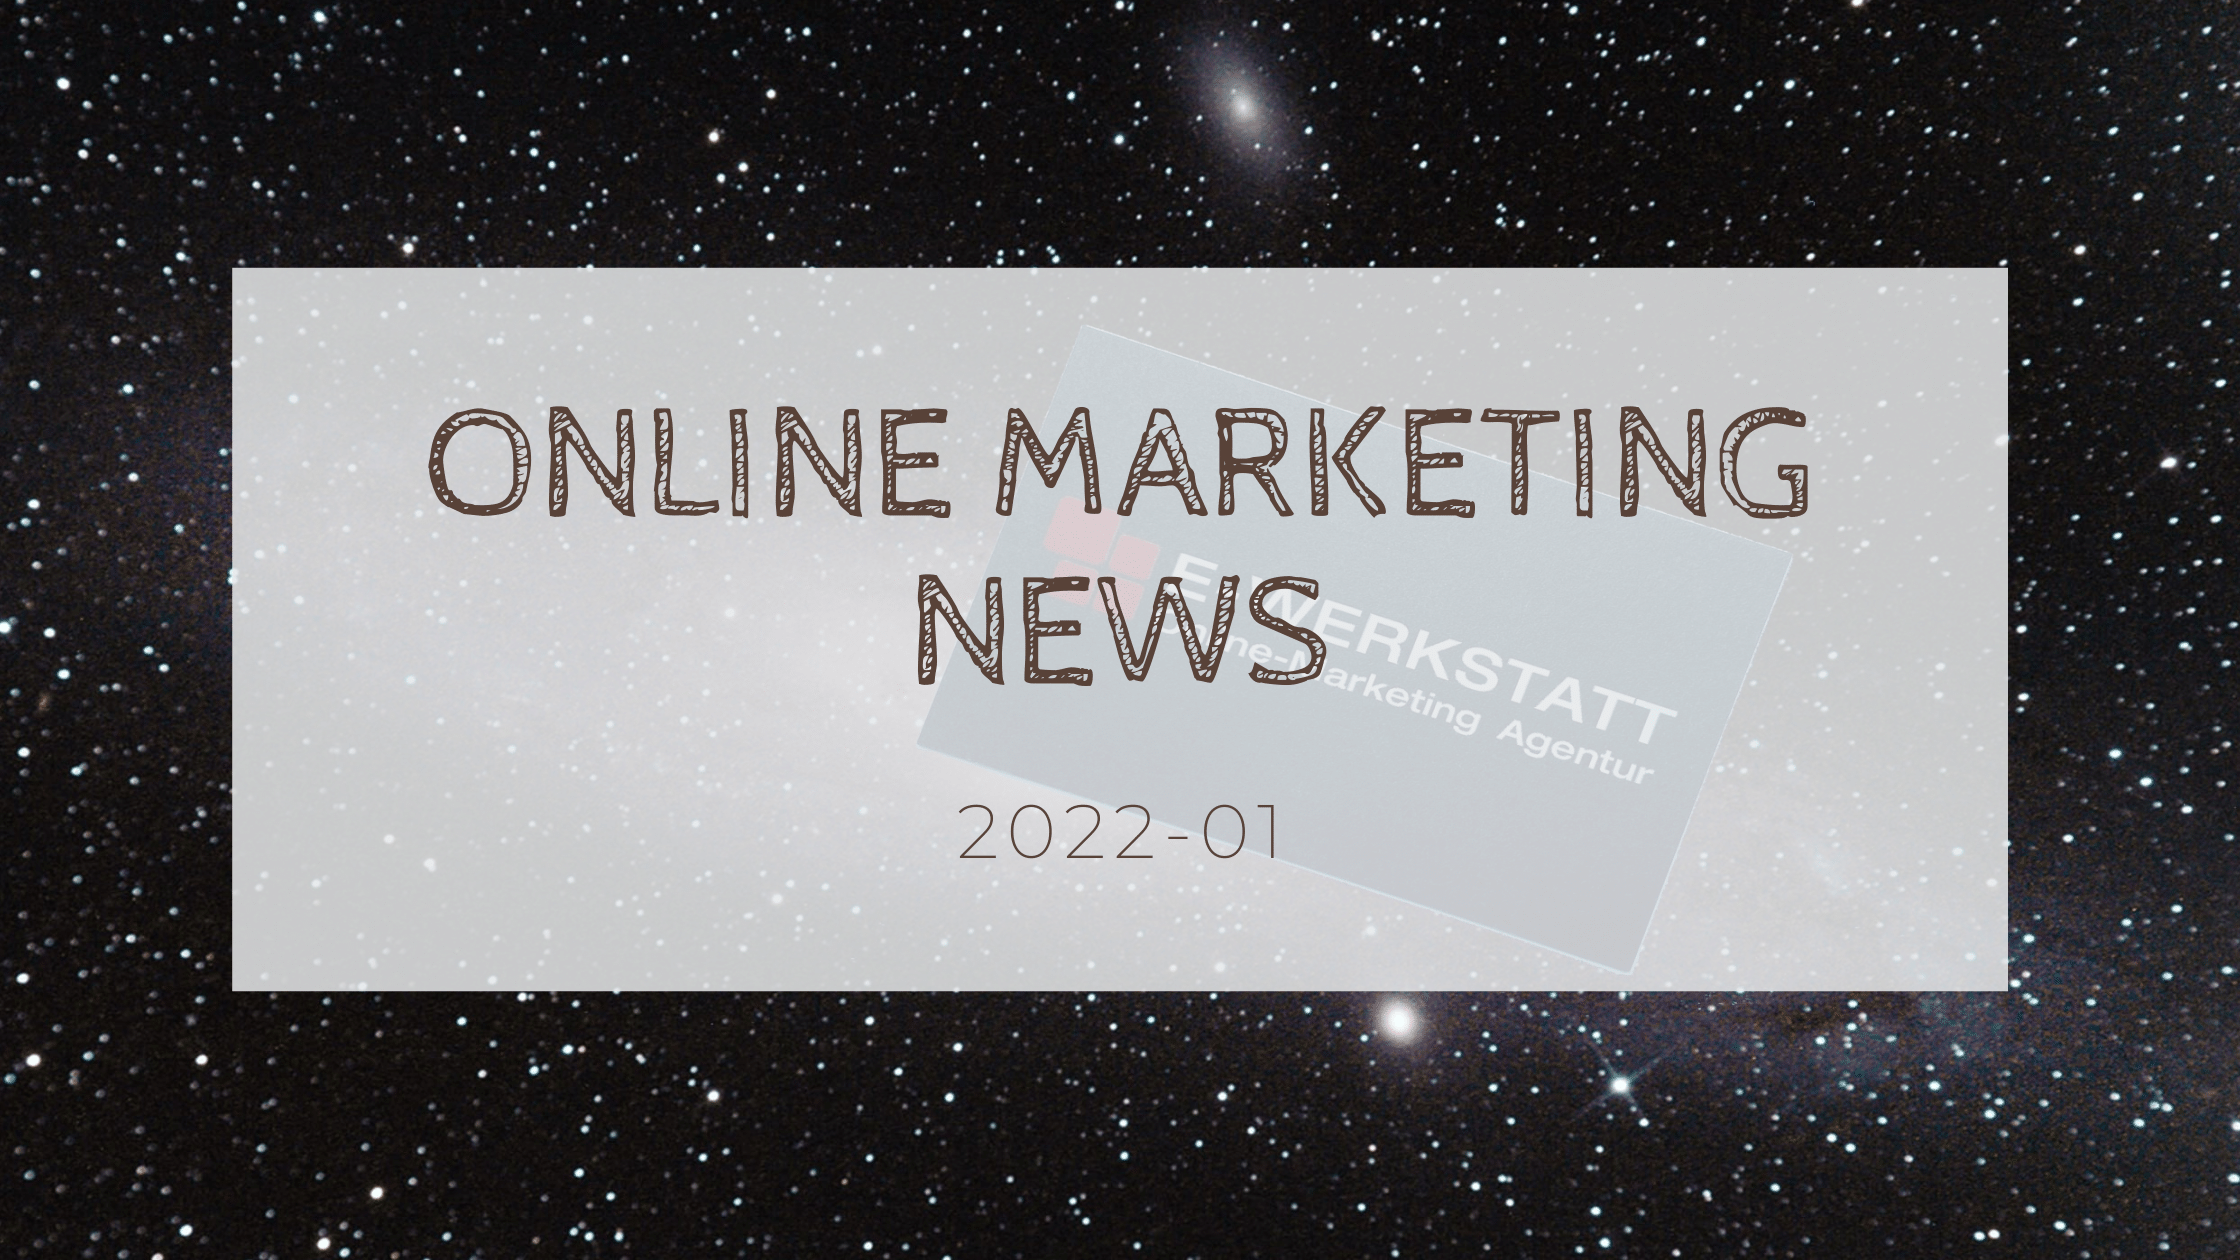 Online Marketing News 2022-01